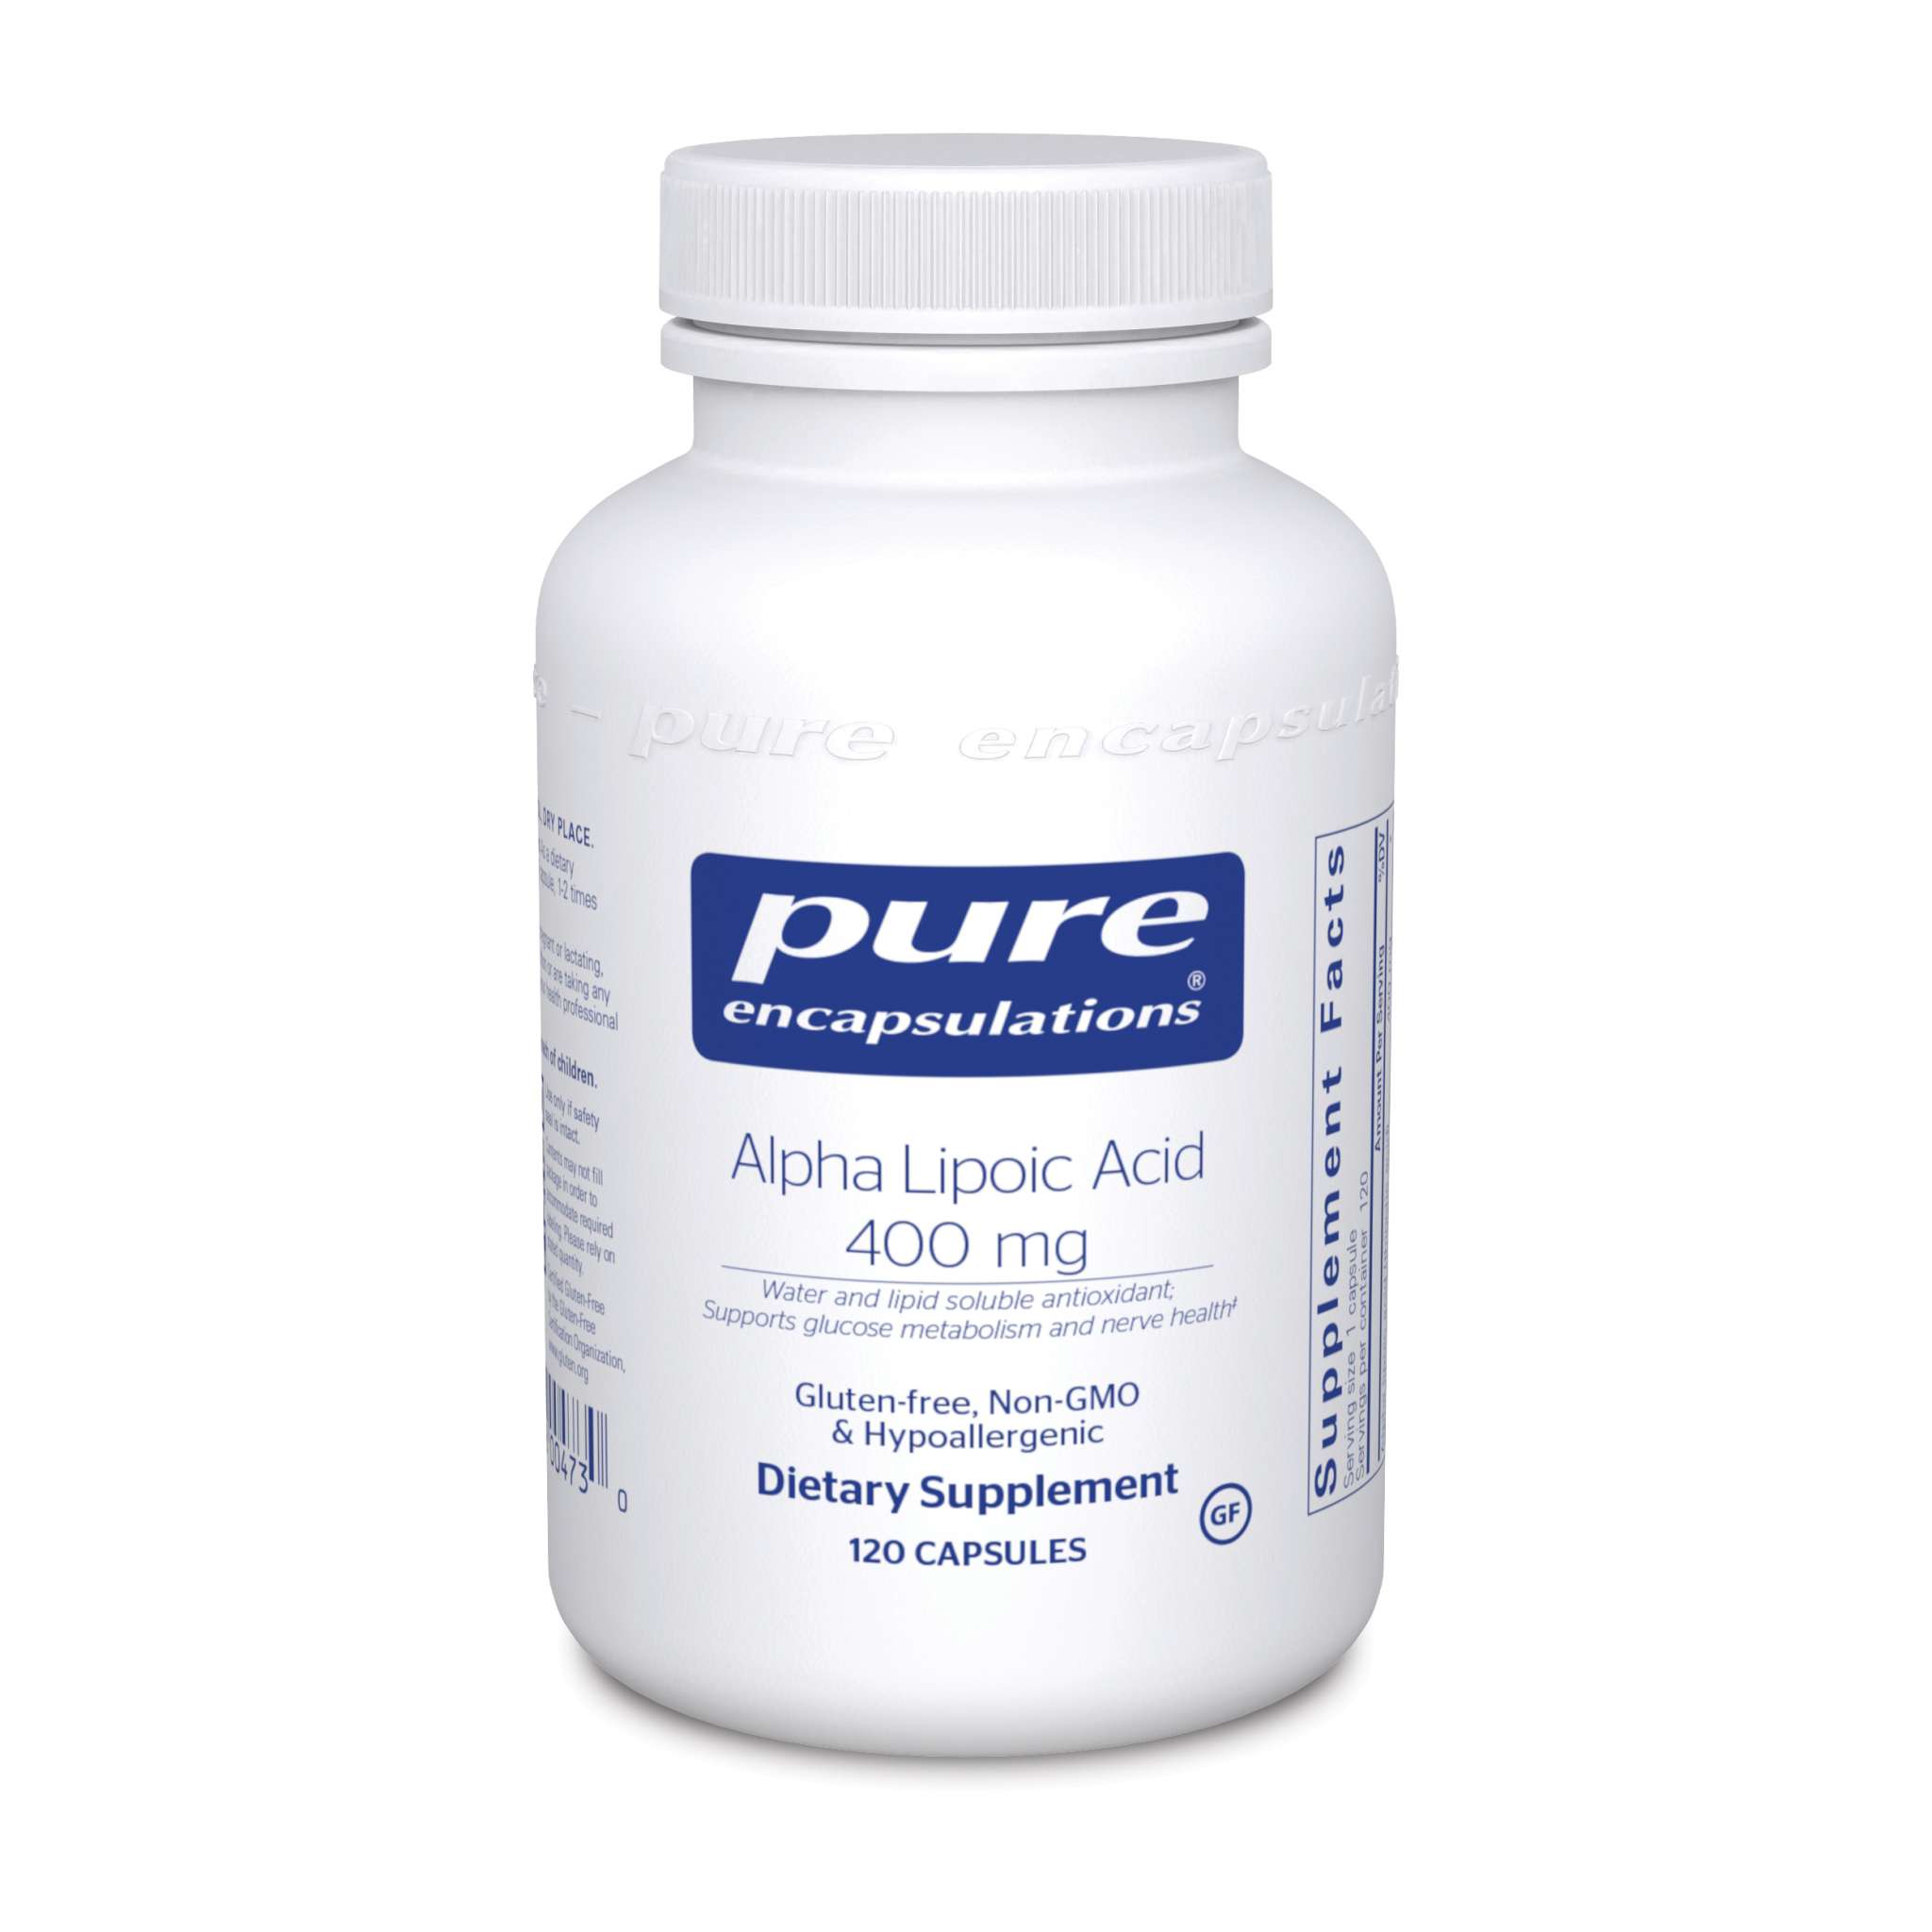 Pure Encapsulations - Lipoic Acid 400 mg Alpha